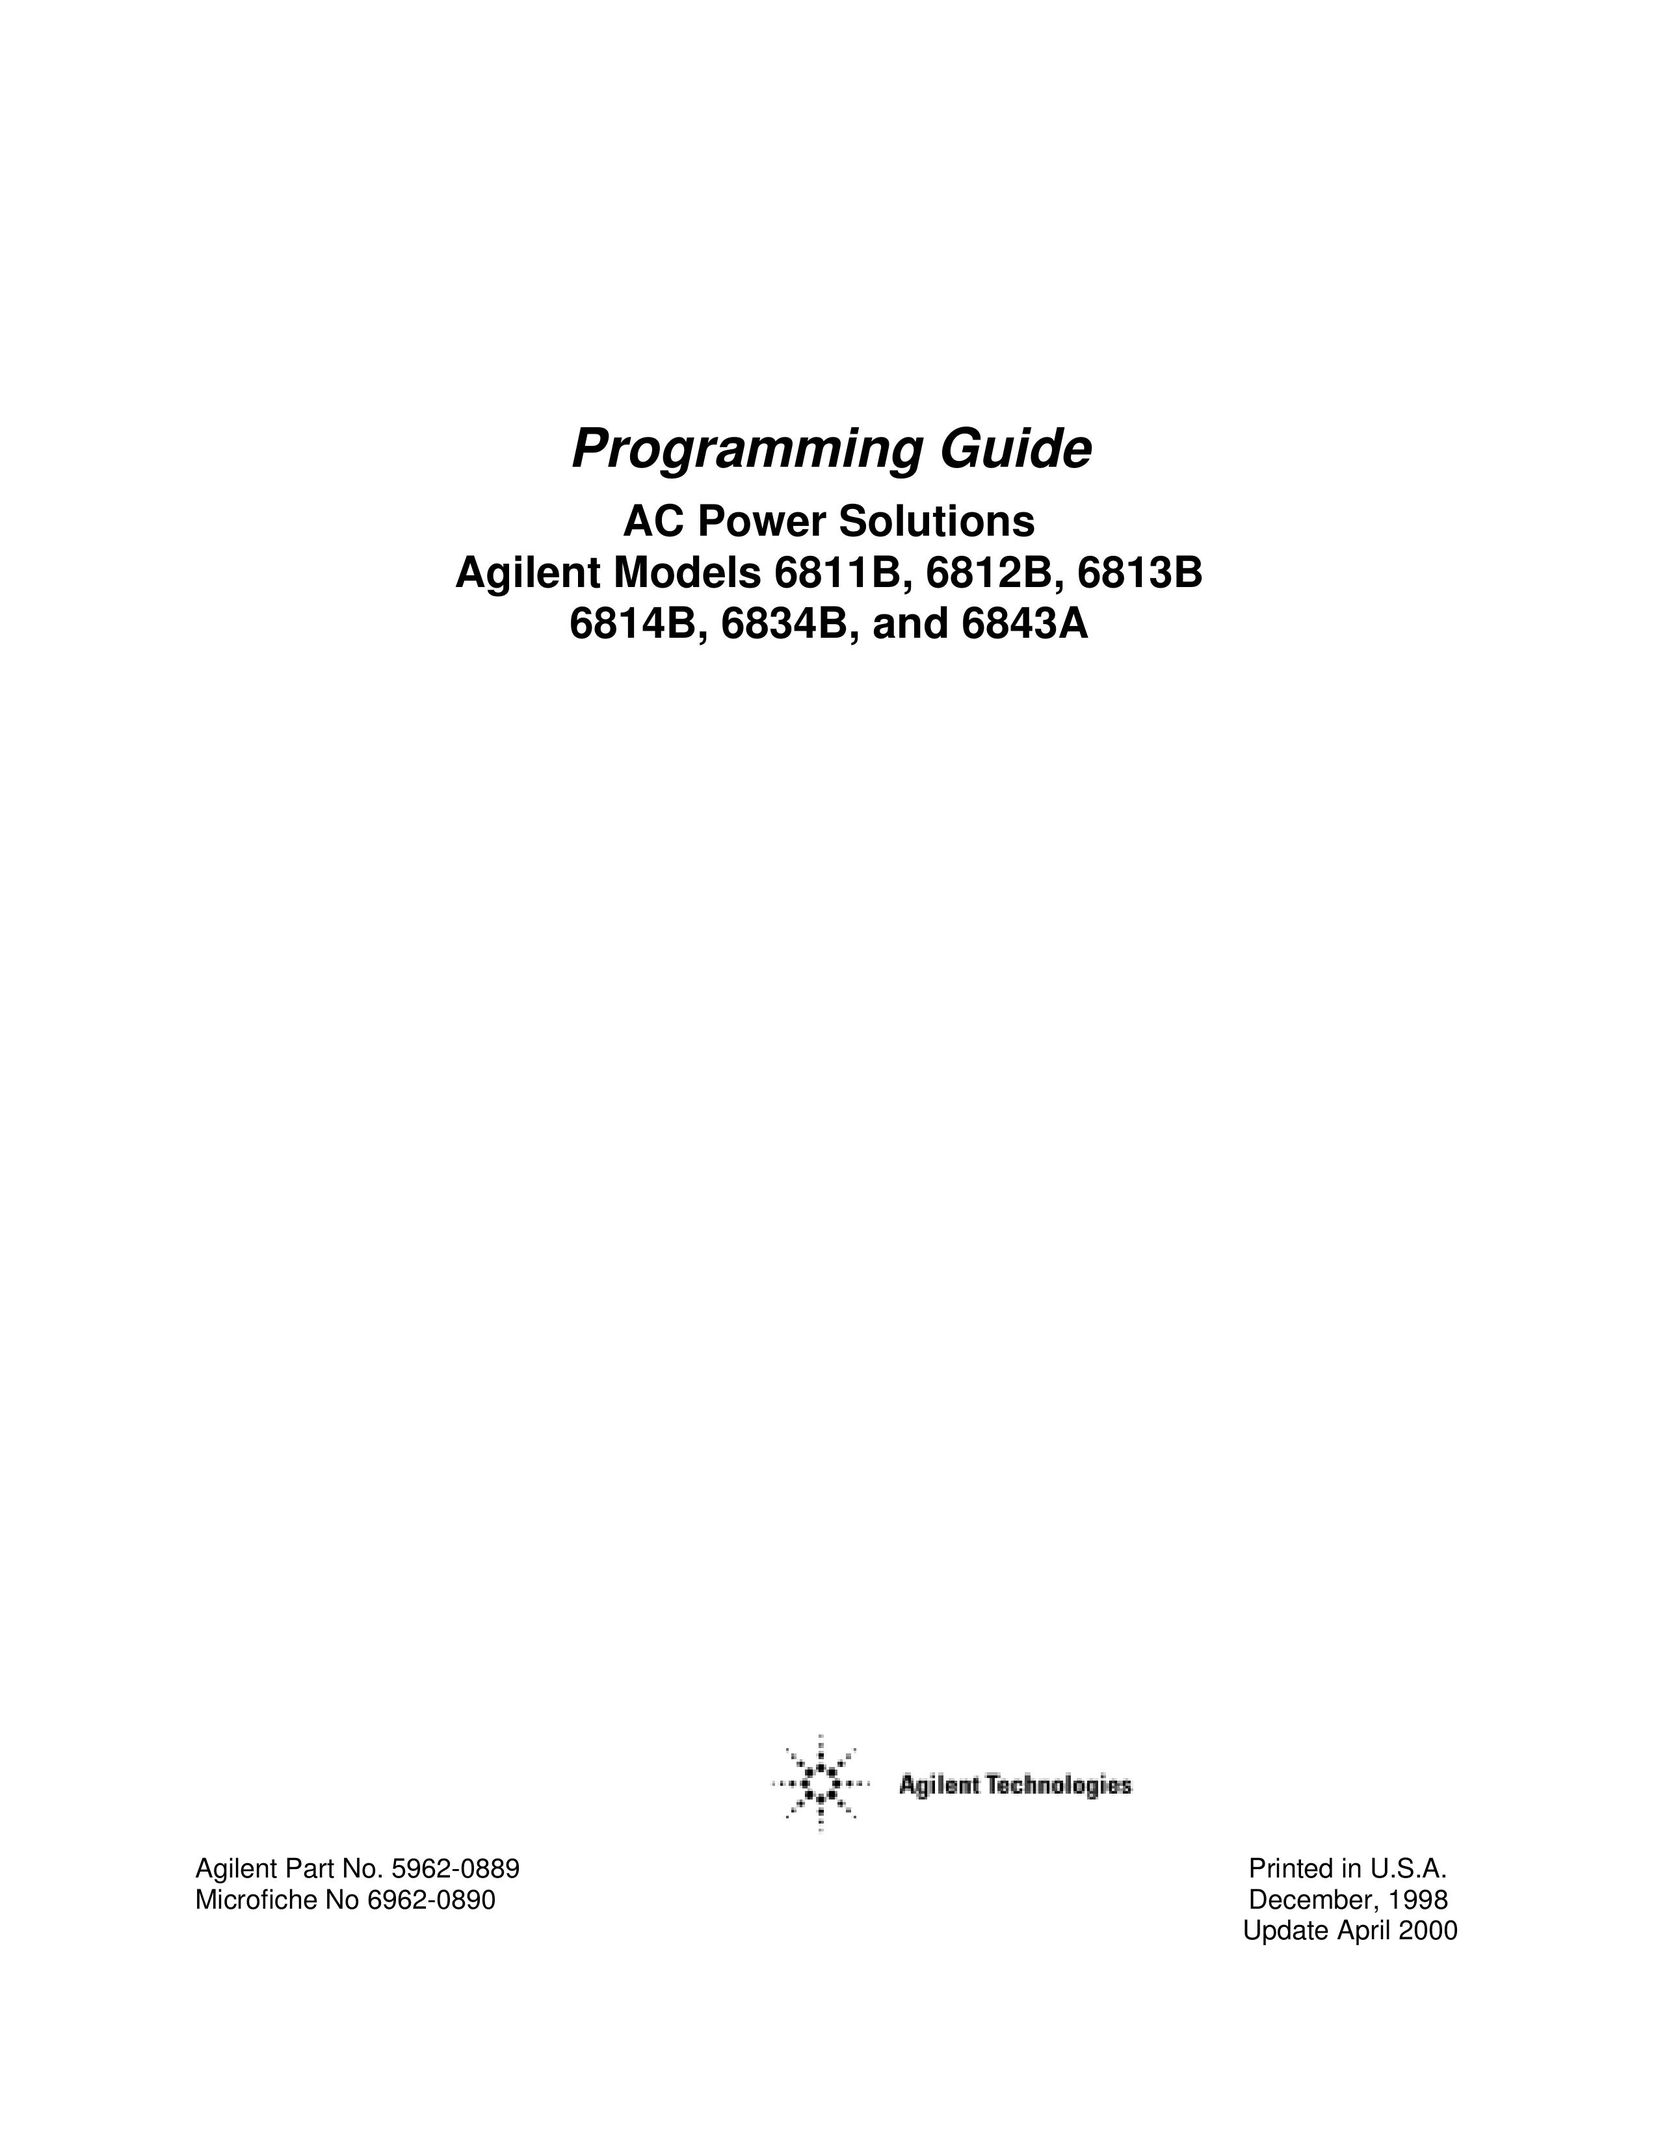 Agilent Technologies 6834B Welding System User Manual